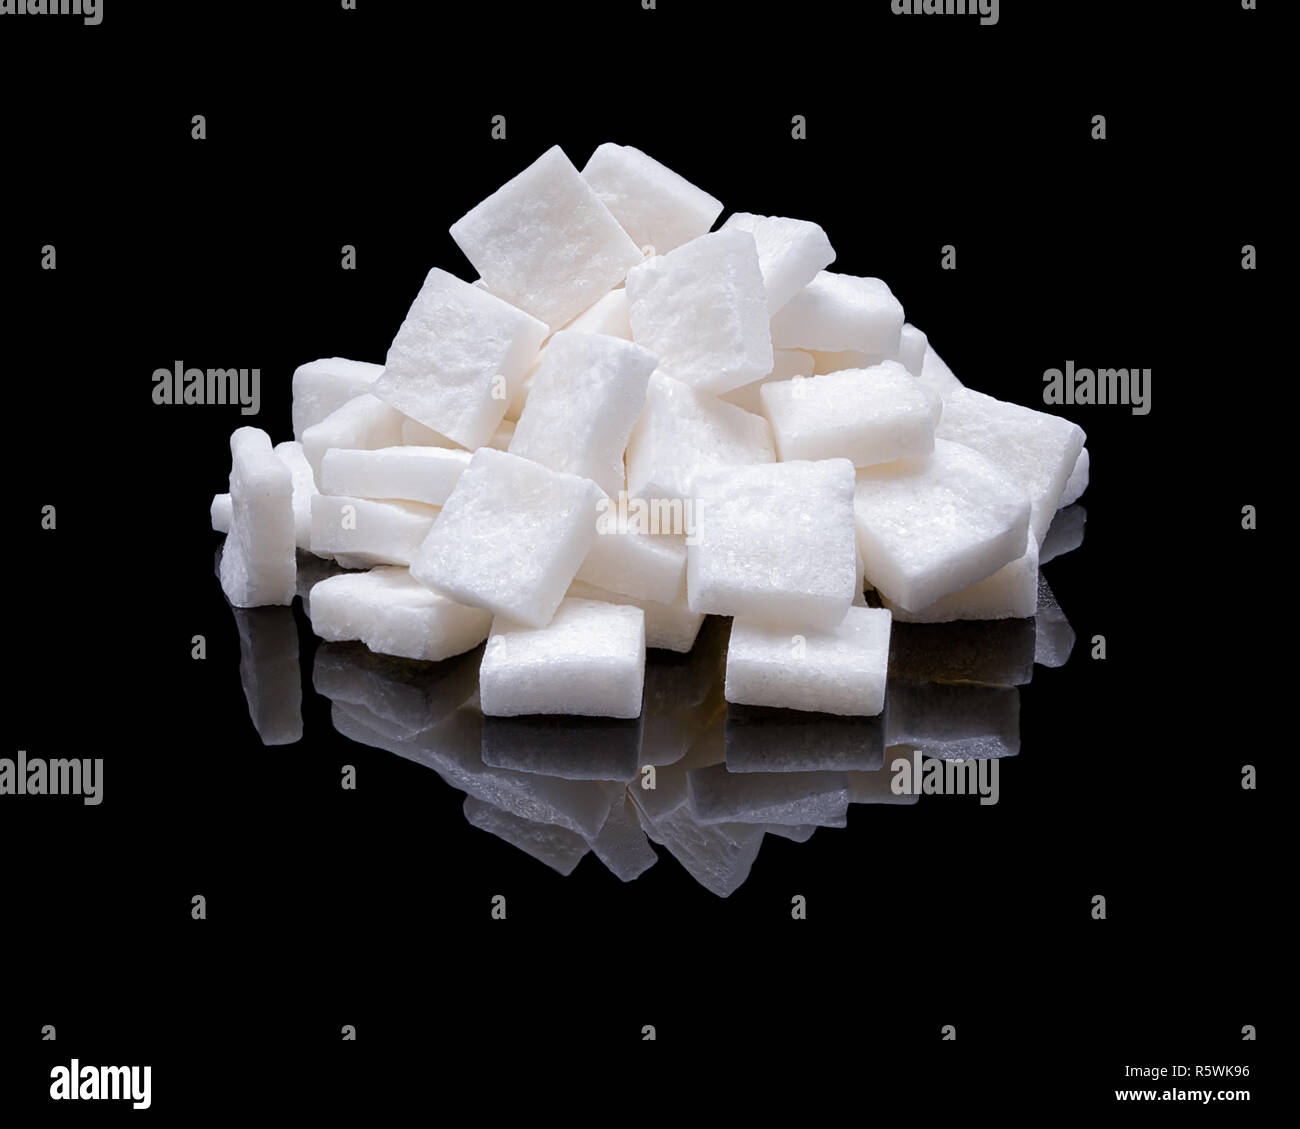 Pile of lump white sugar Stock Photo - Alamy